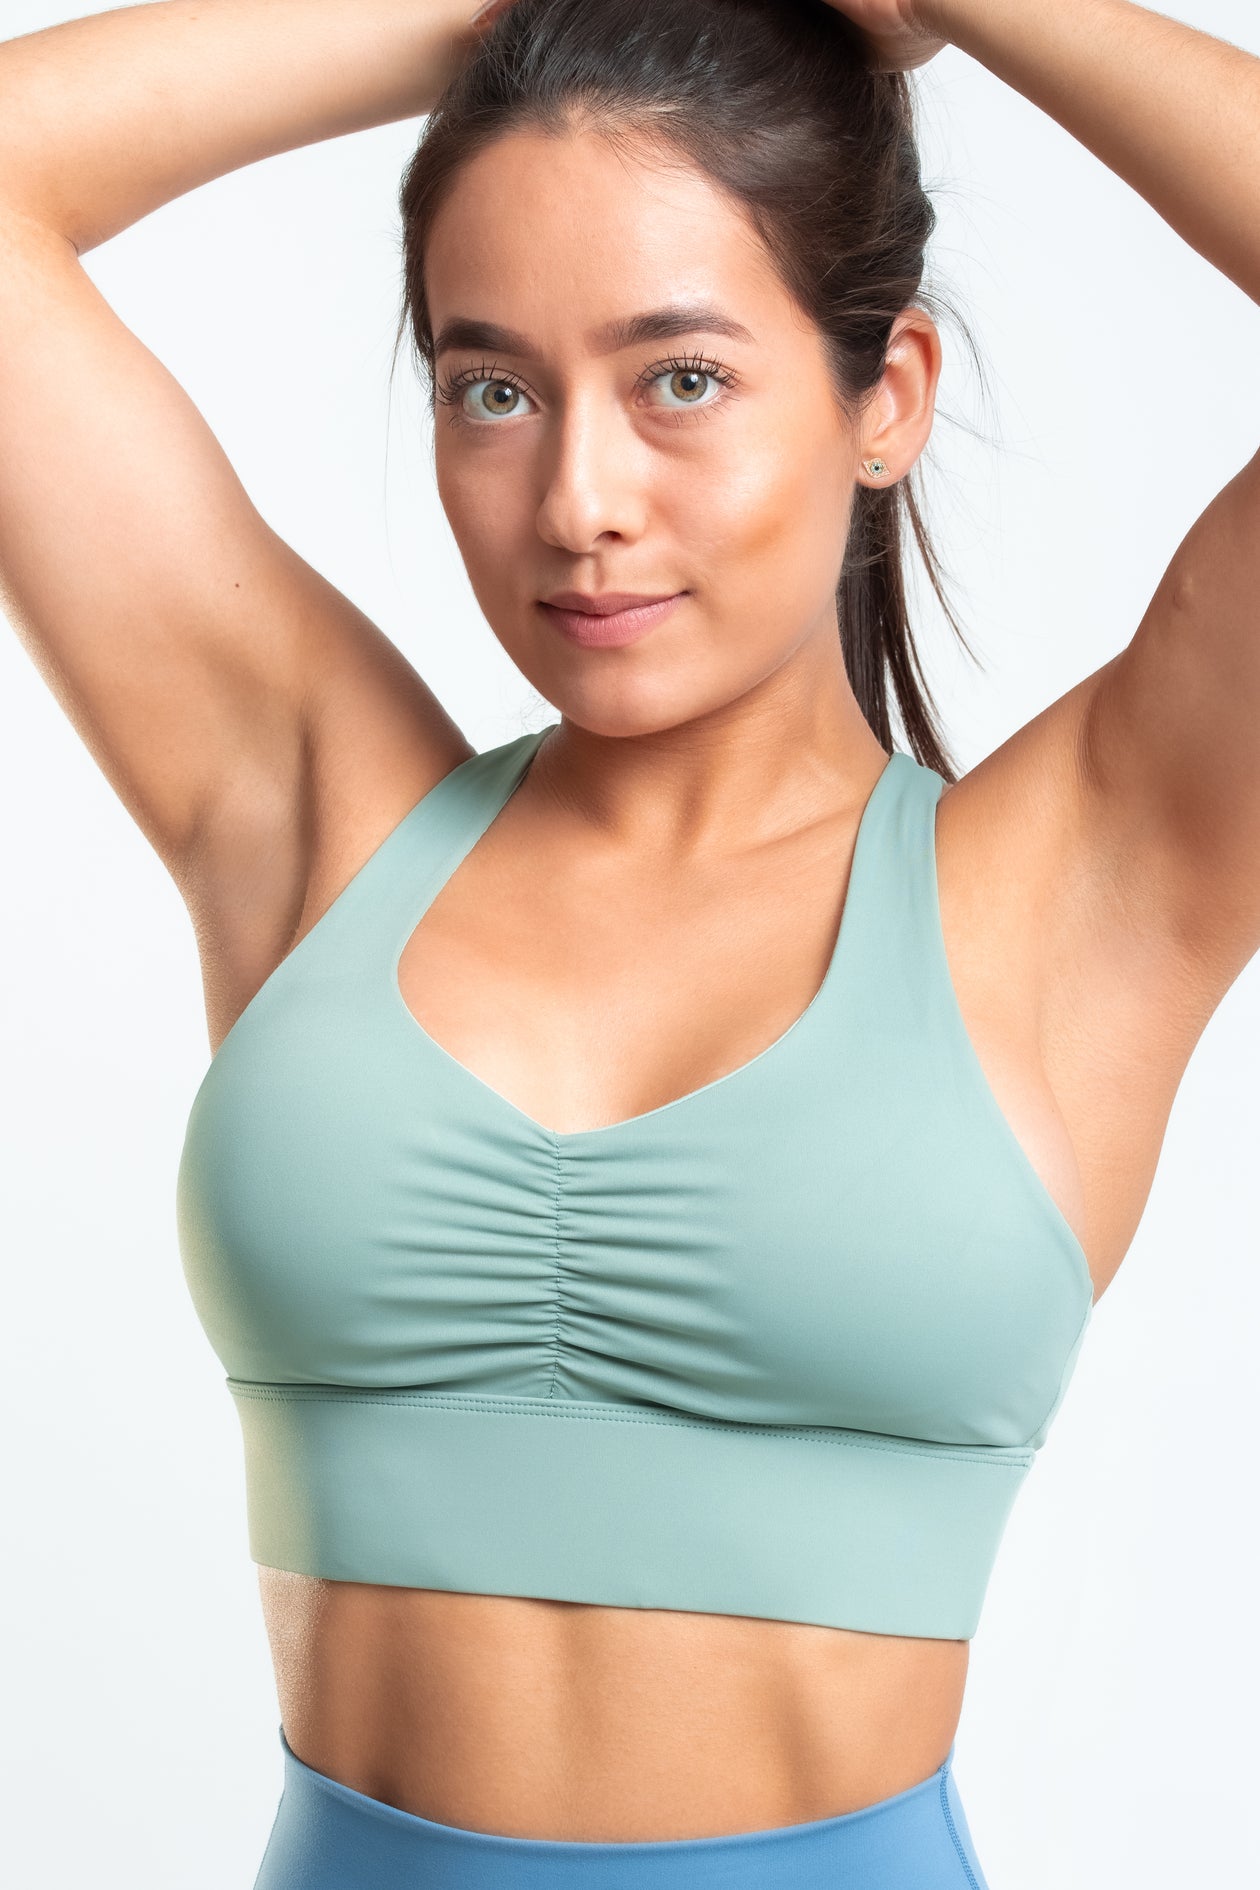 Women's high impact sports bra - Activewear manufacturer